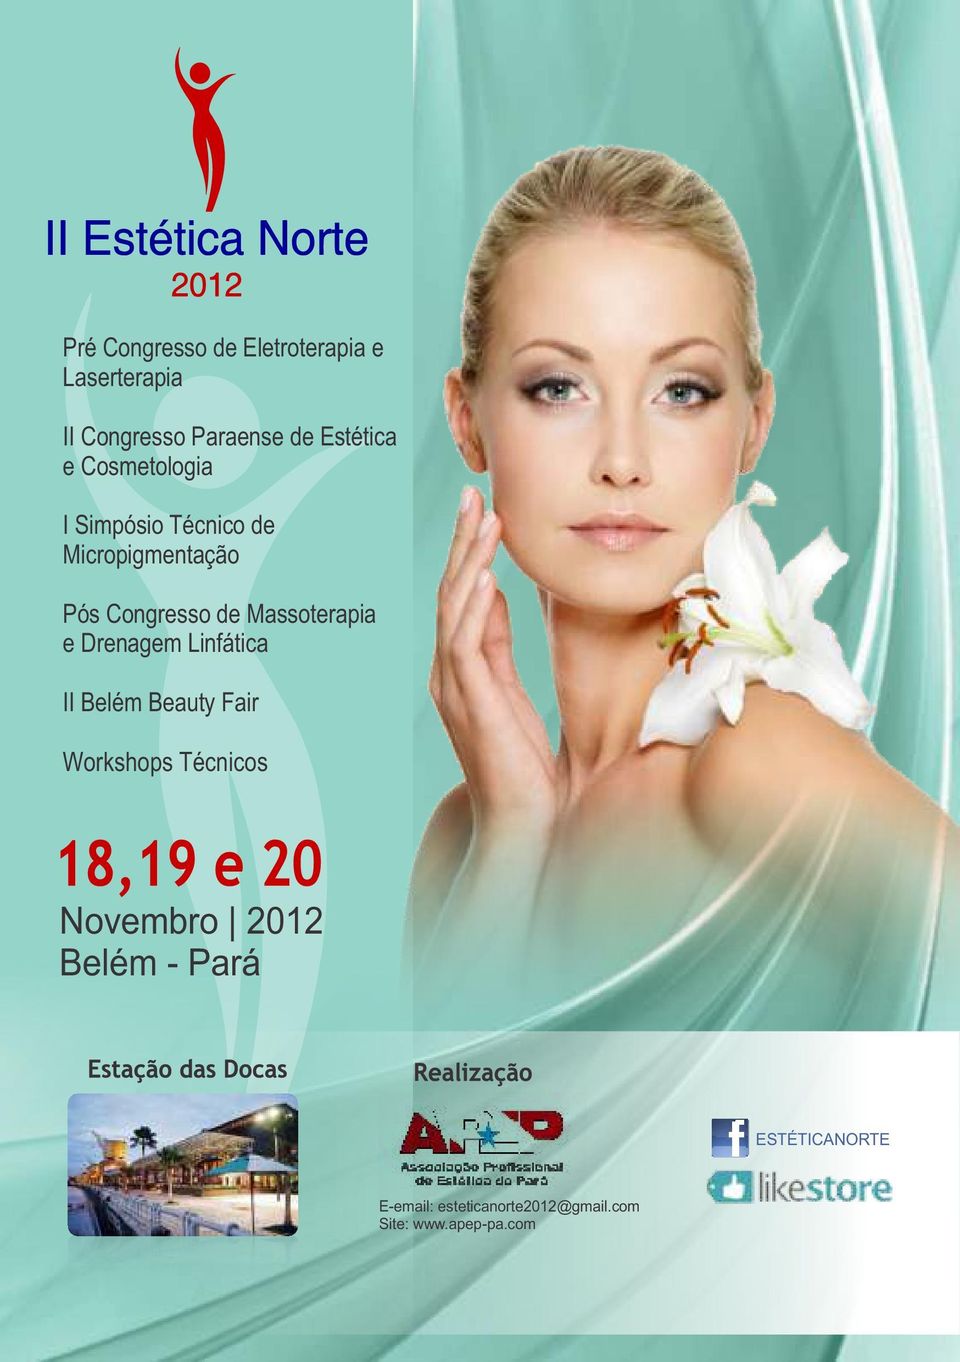 Massoterapia e Drenagem Linfática II Belém Beauty Fair Workshops Técnicos